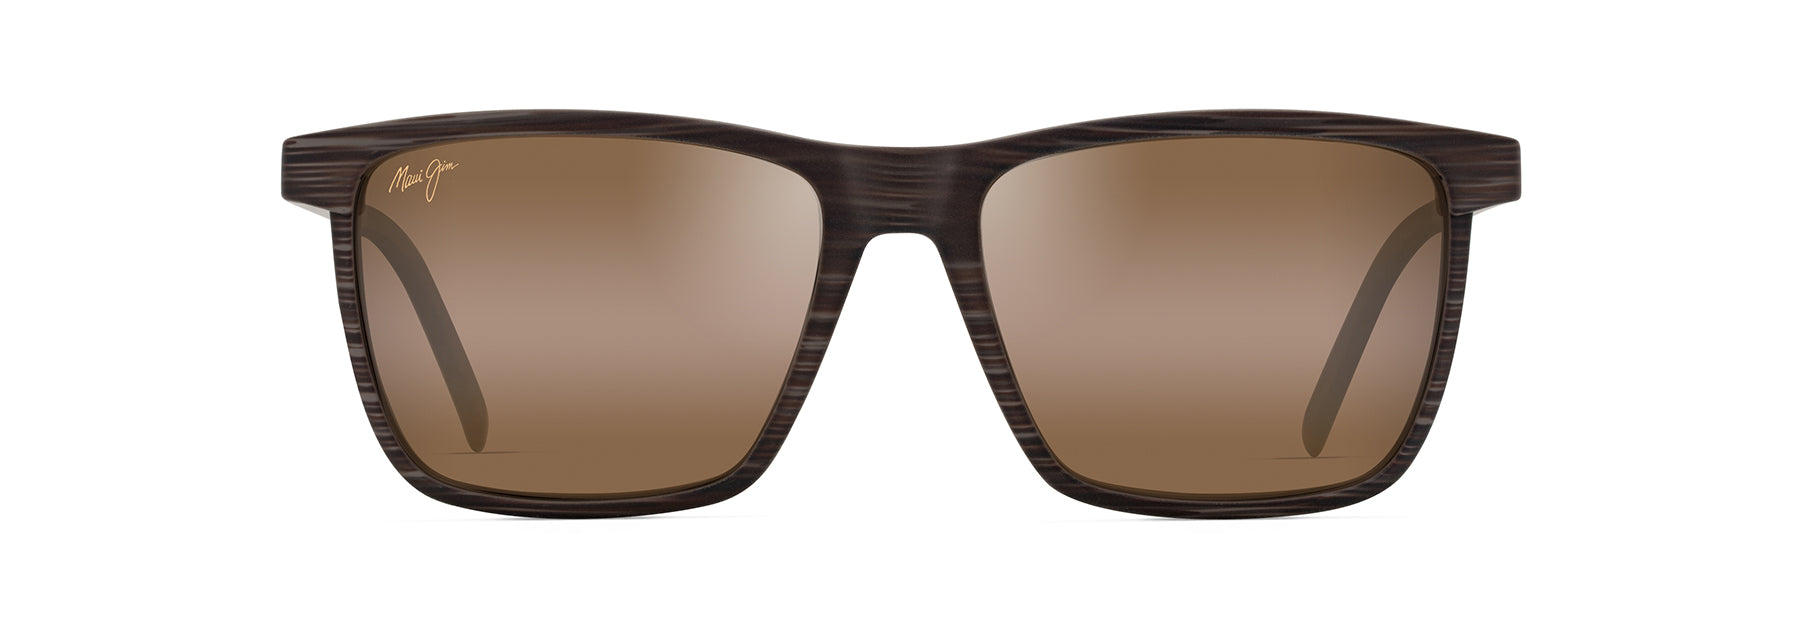 Sunglass Way Maui Jim American – Sunglasses One